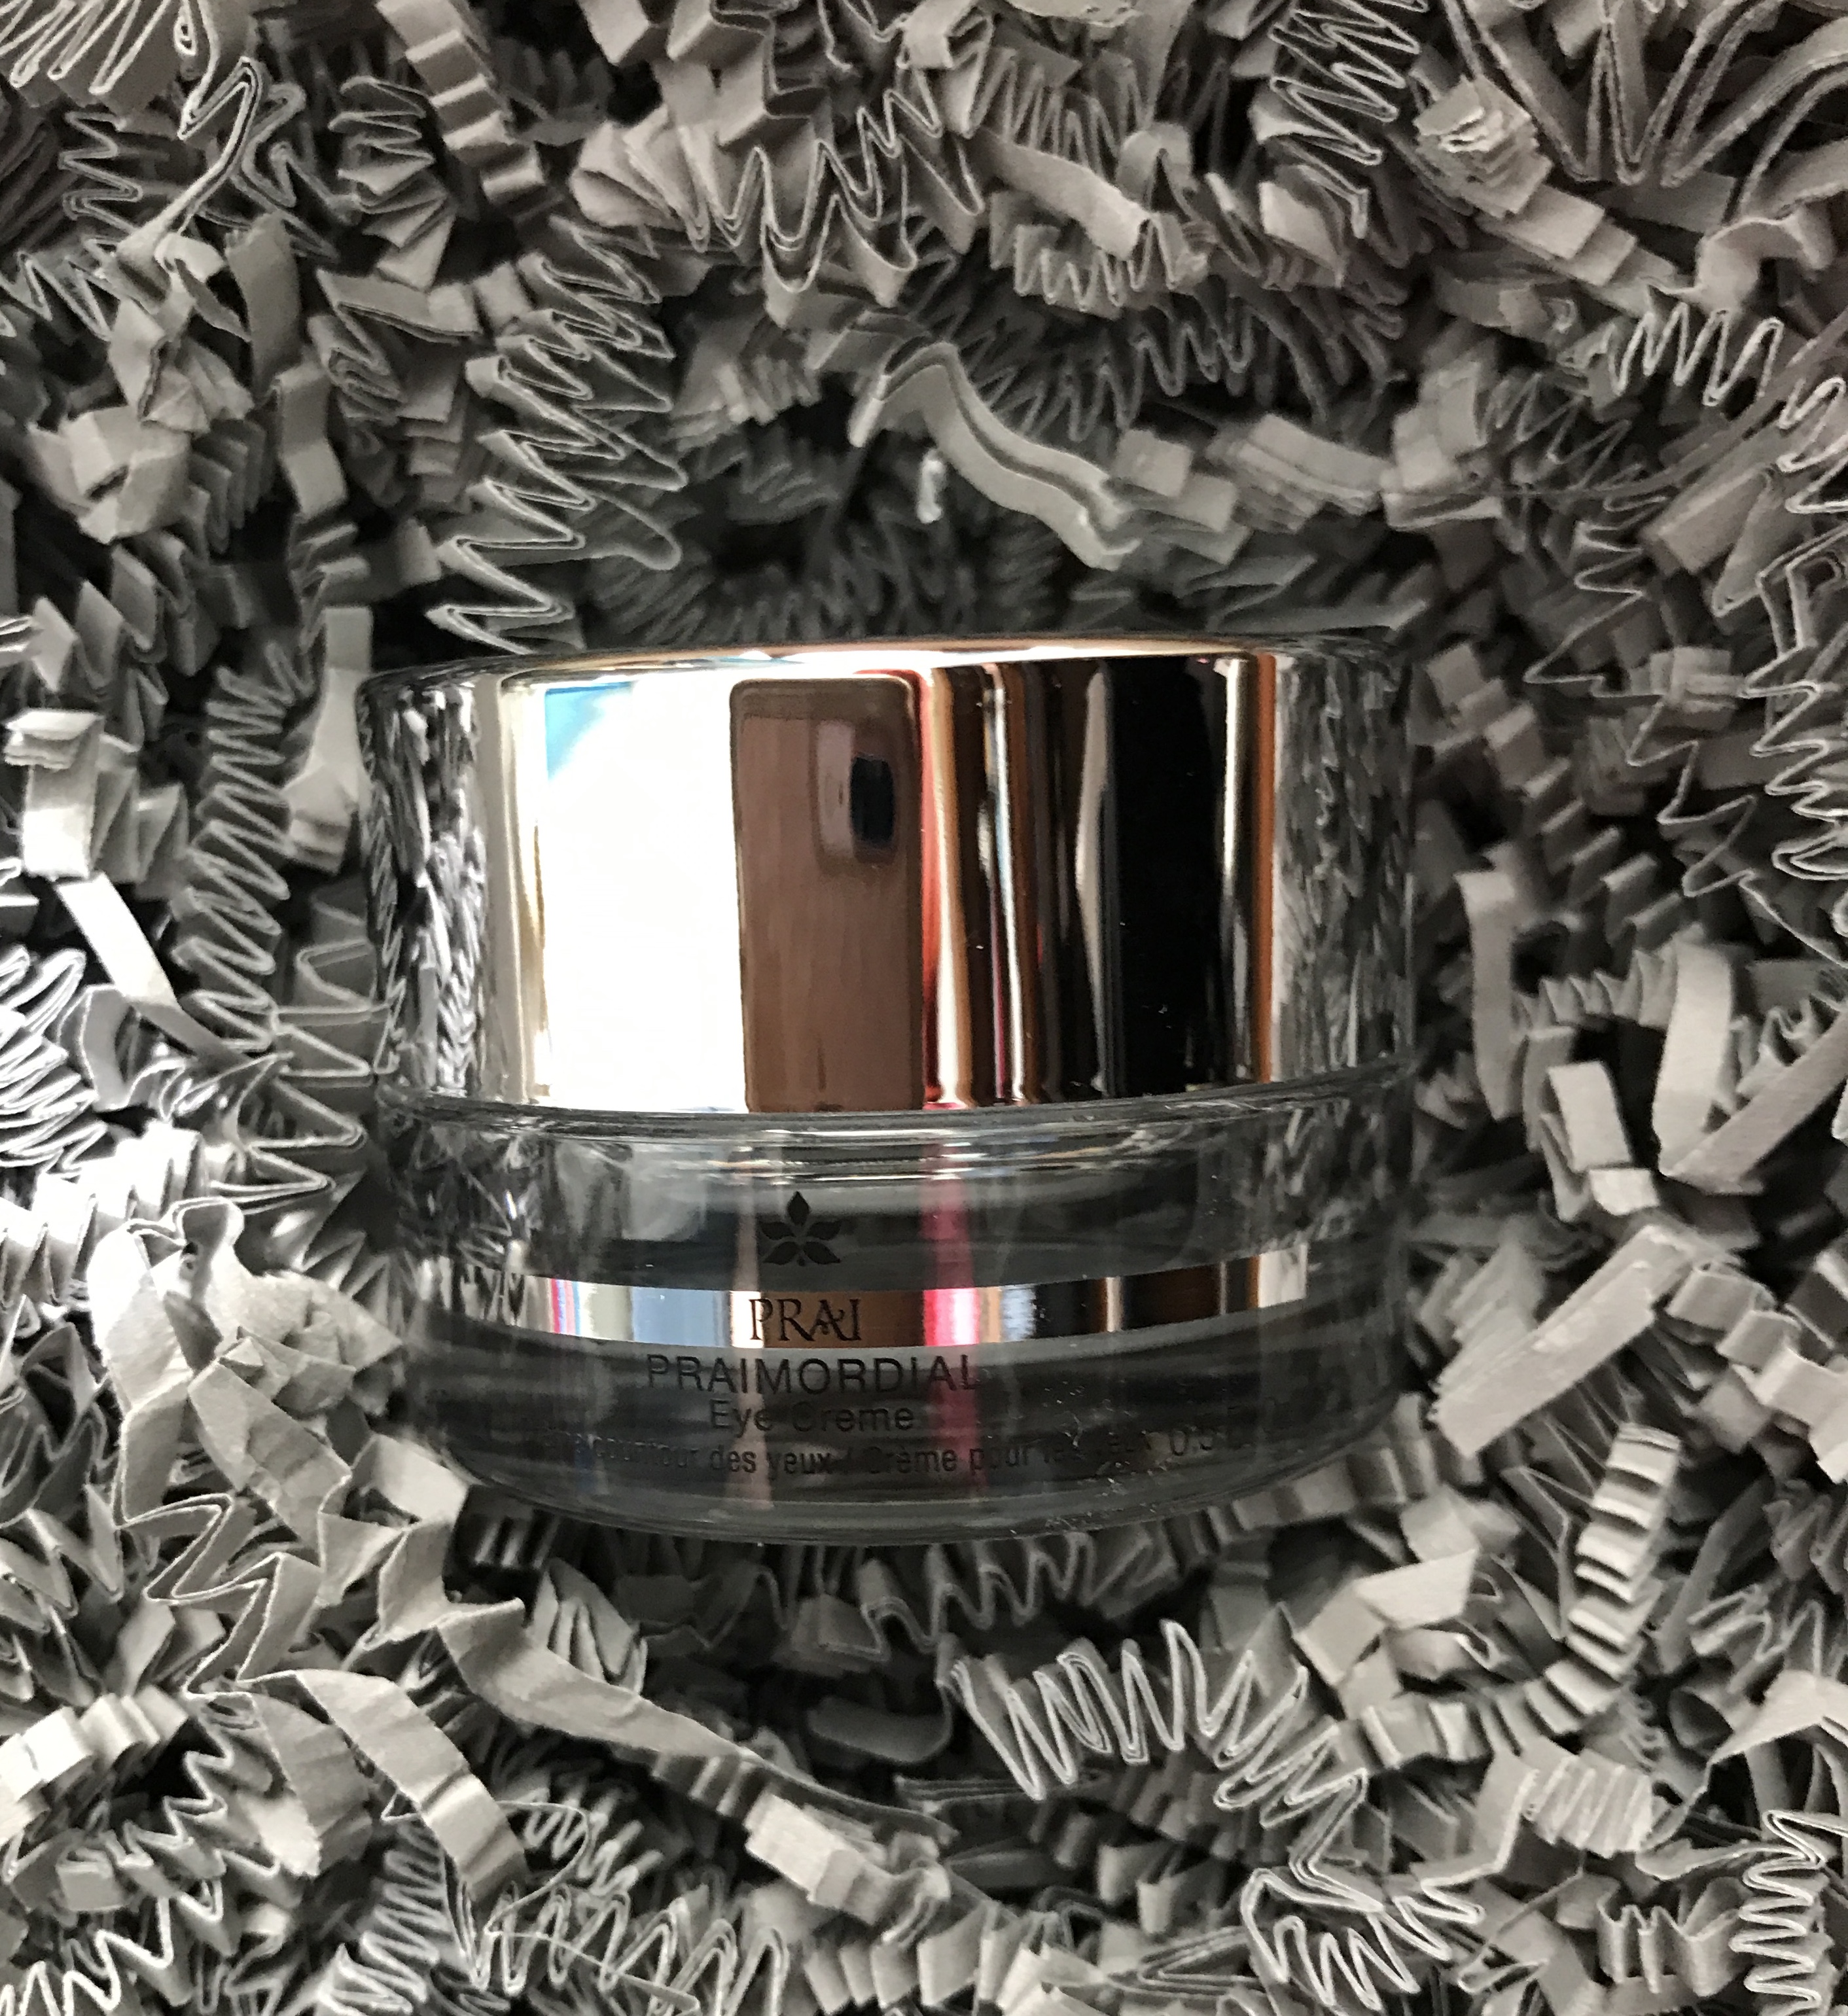 jar of PRAImordial Eye Creme against silver paper shreds, neversaydiebeauty.com